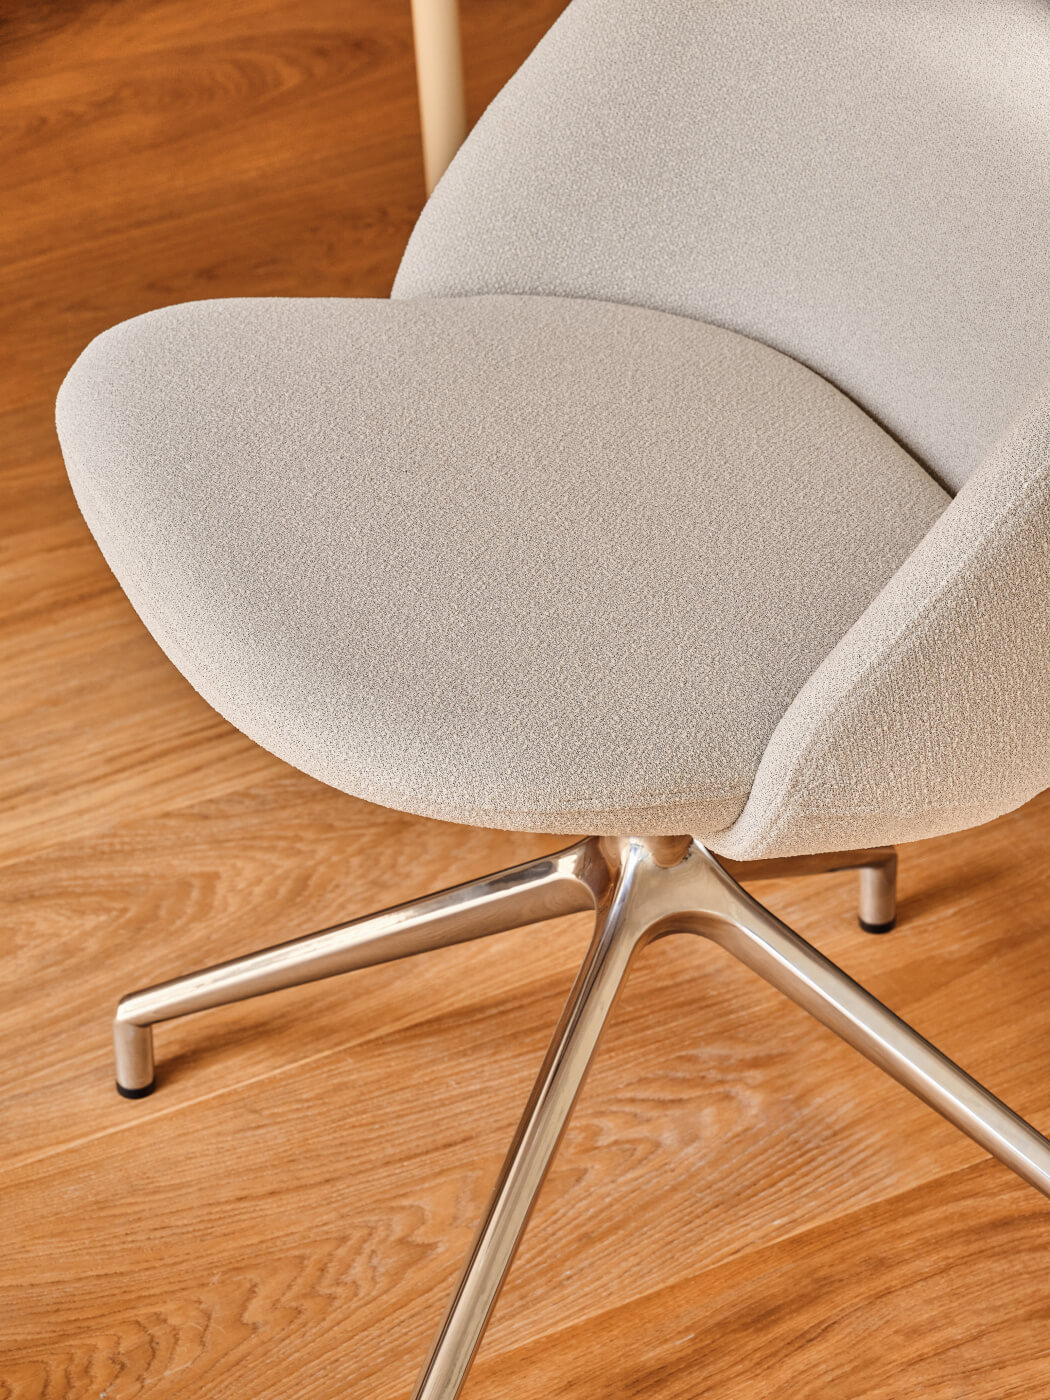 Paralel Sessel mit poliertem Aluminiumfuß